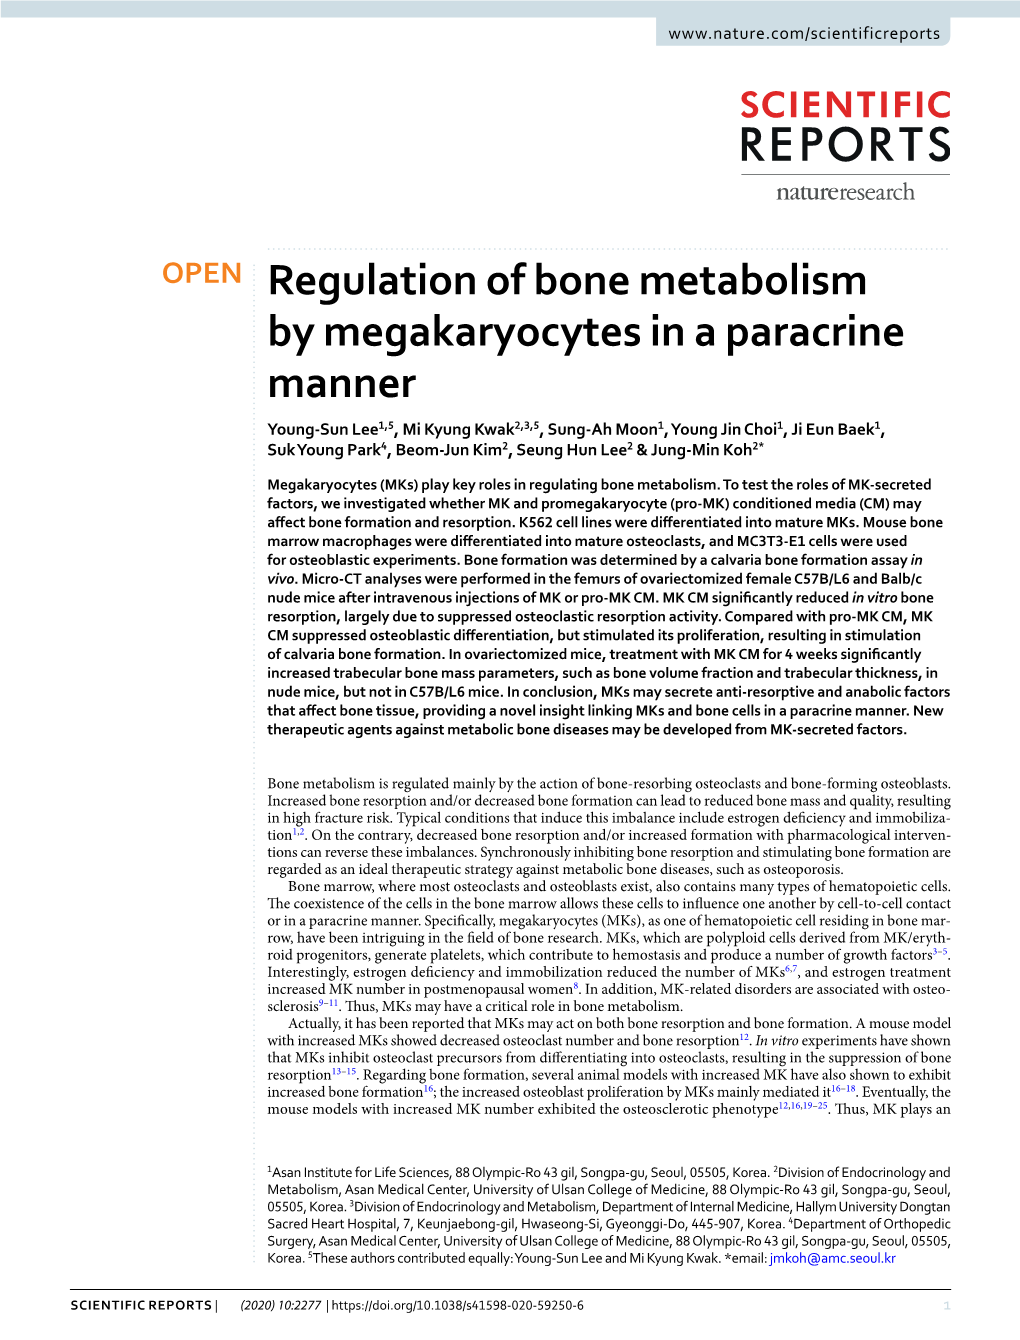 Regulation of Bone Metabolism by Megakaryocytes in a Paracrine